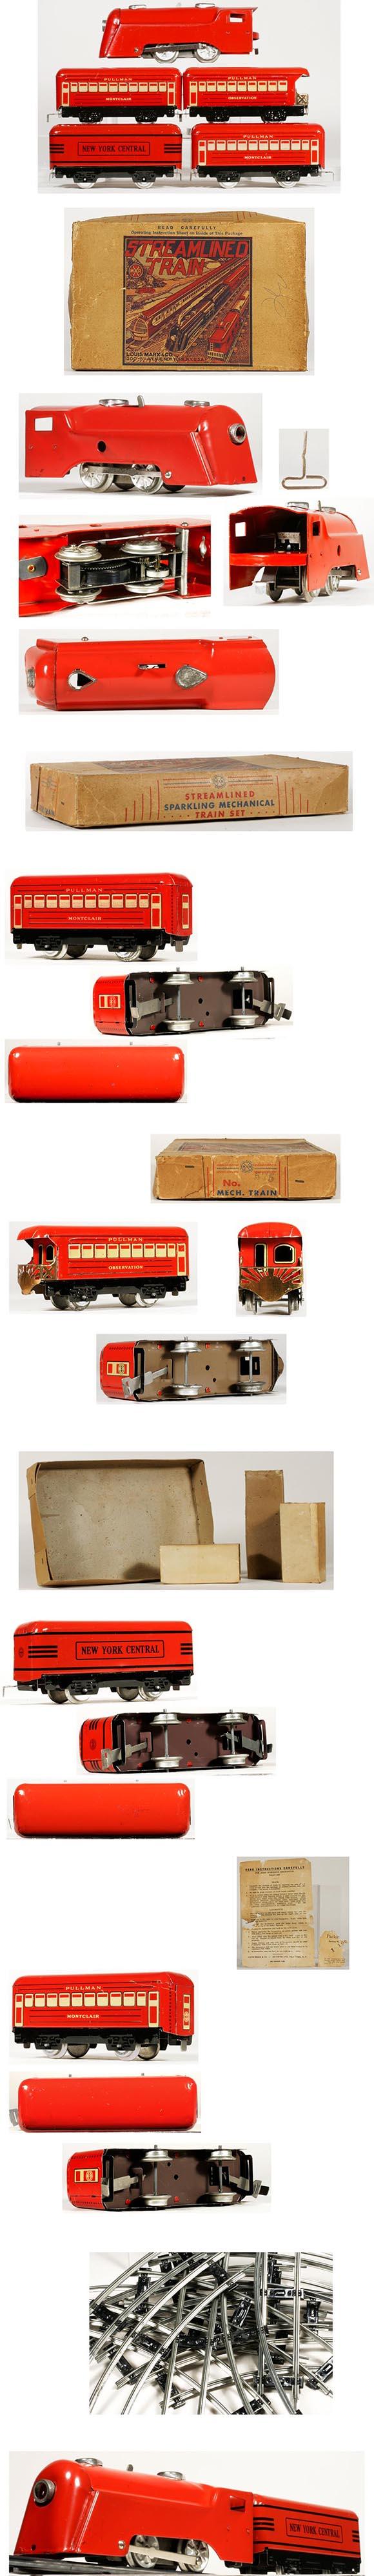 1940 Marx, Streamlined Commodore Vanderbilt Train Set in Original Box